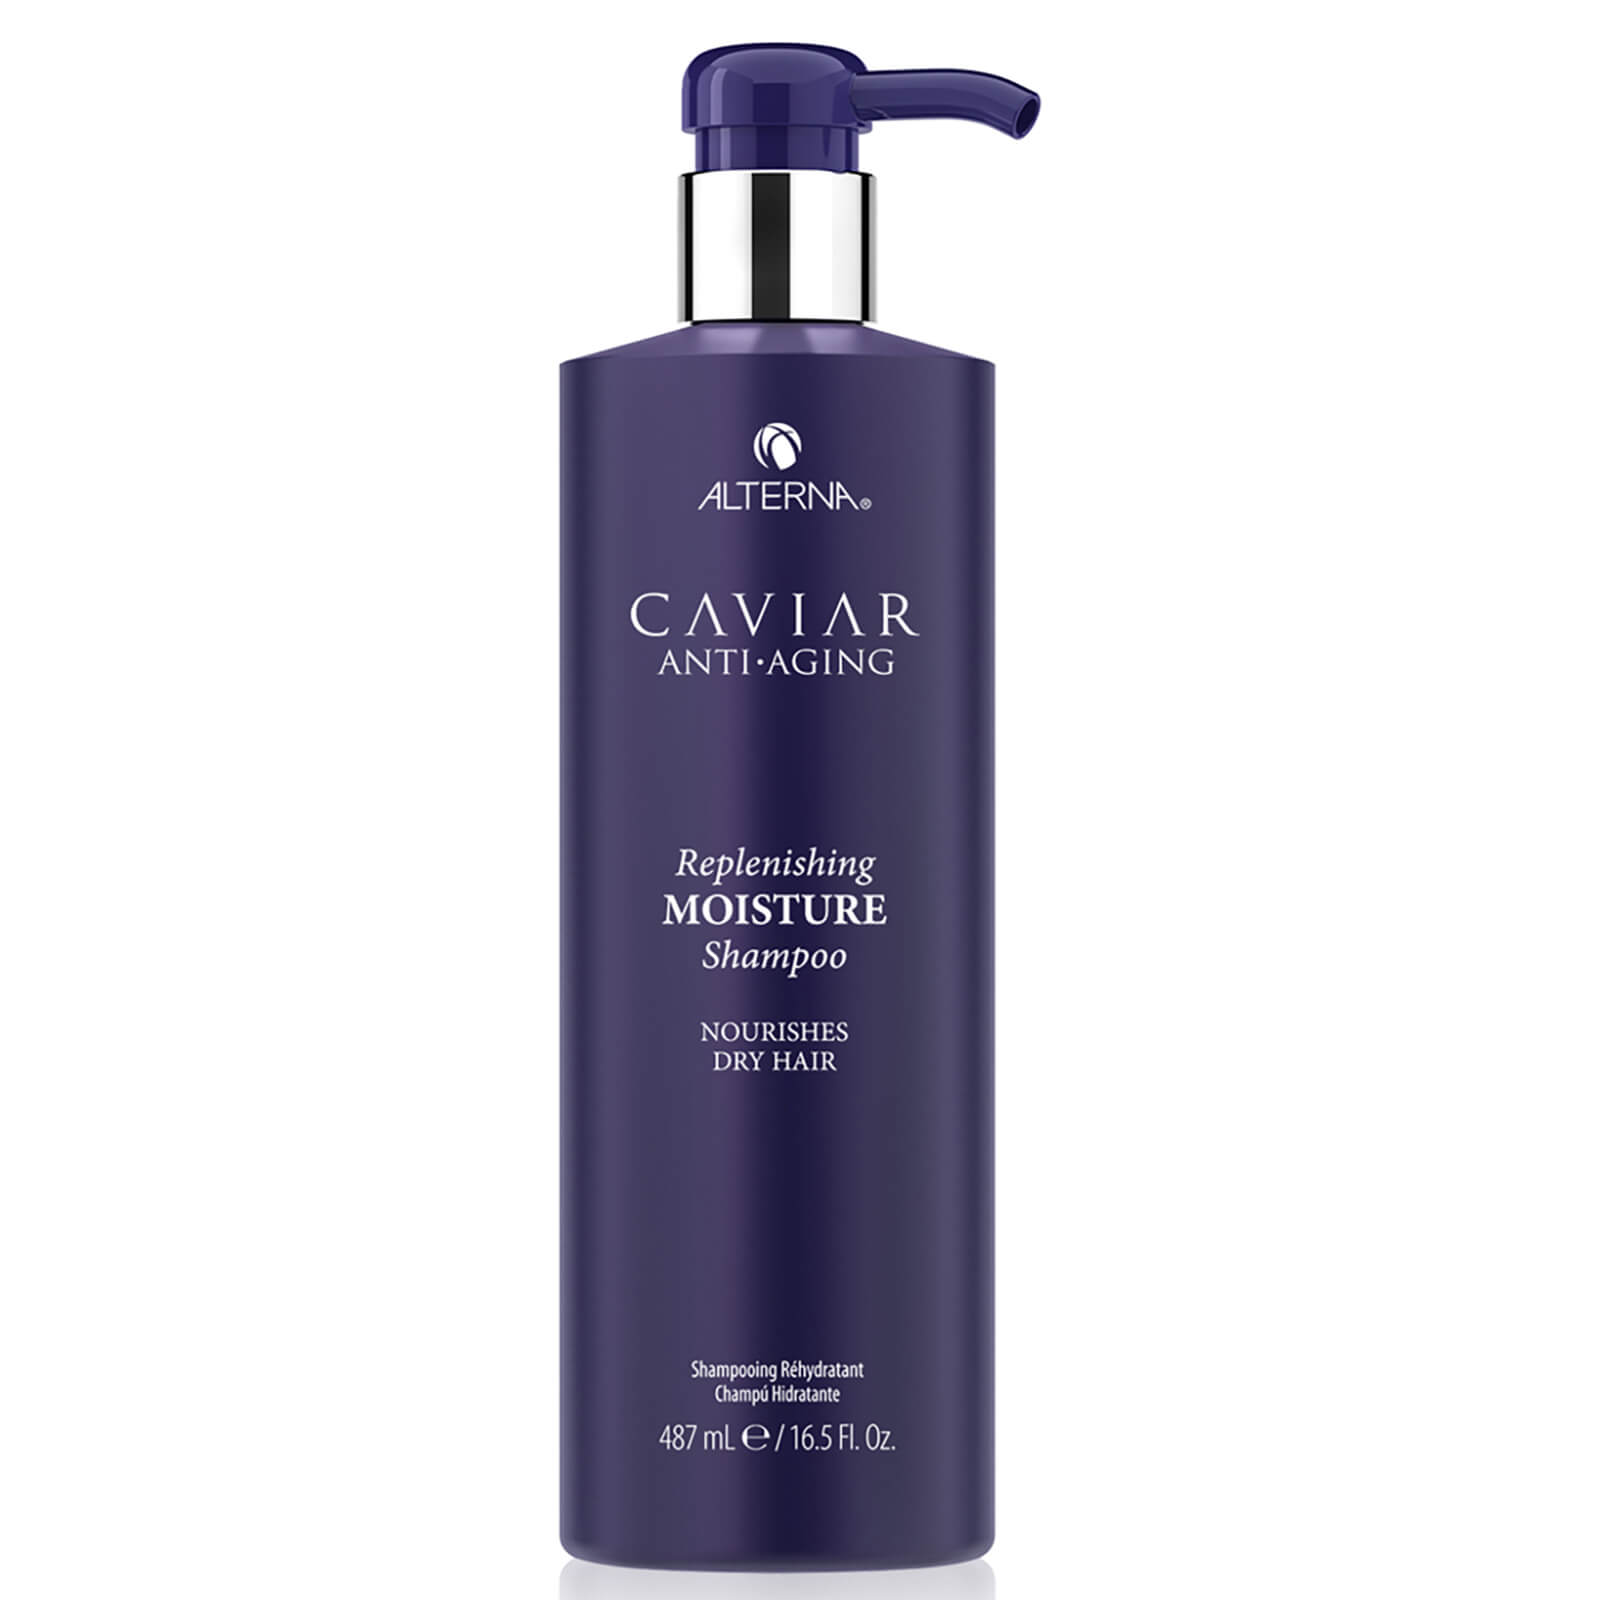 Shop Alterna Caviar Anti-aging Replenishing Moisture Shampoo 487ml